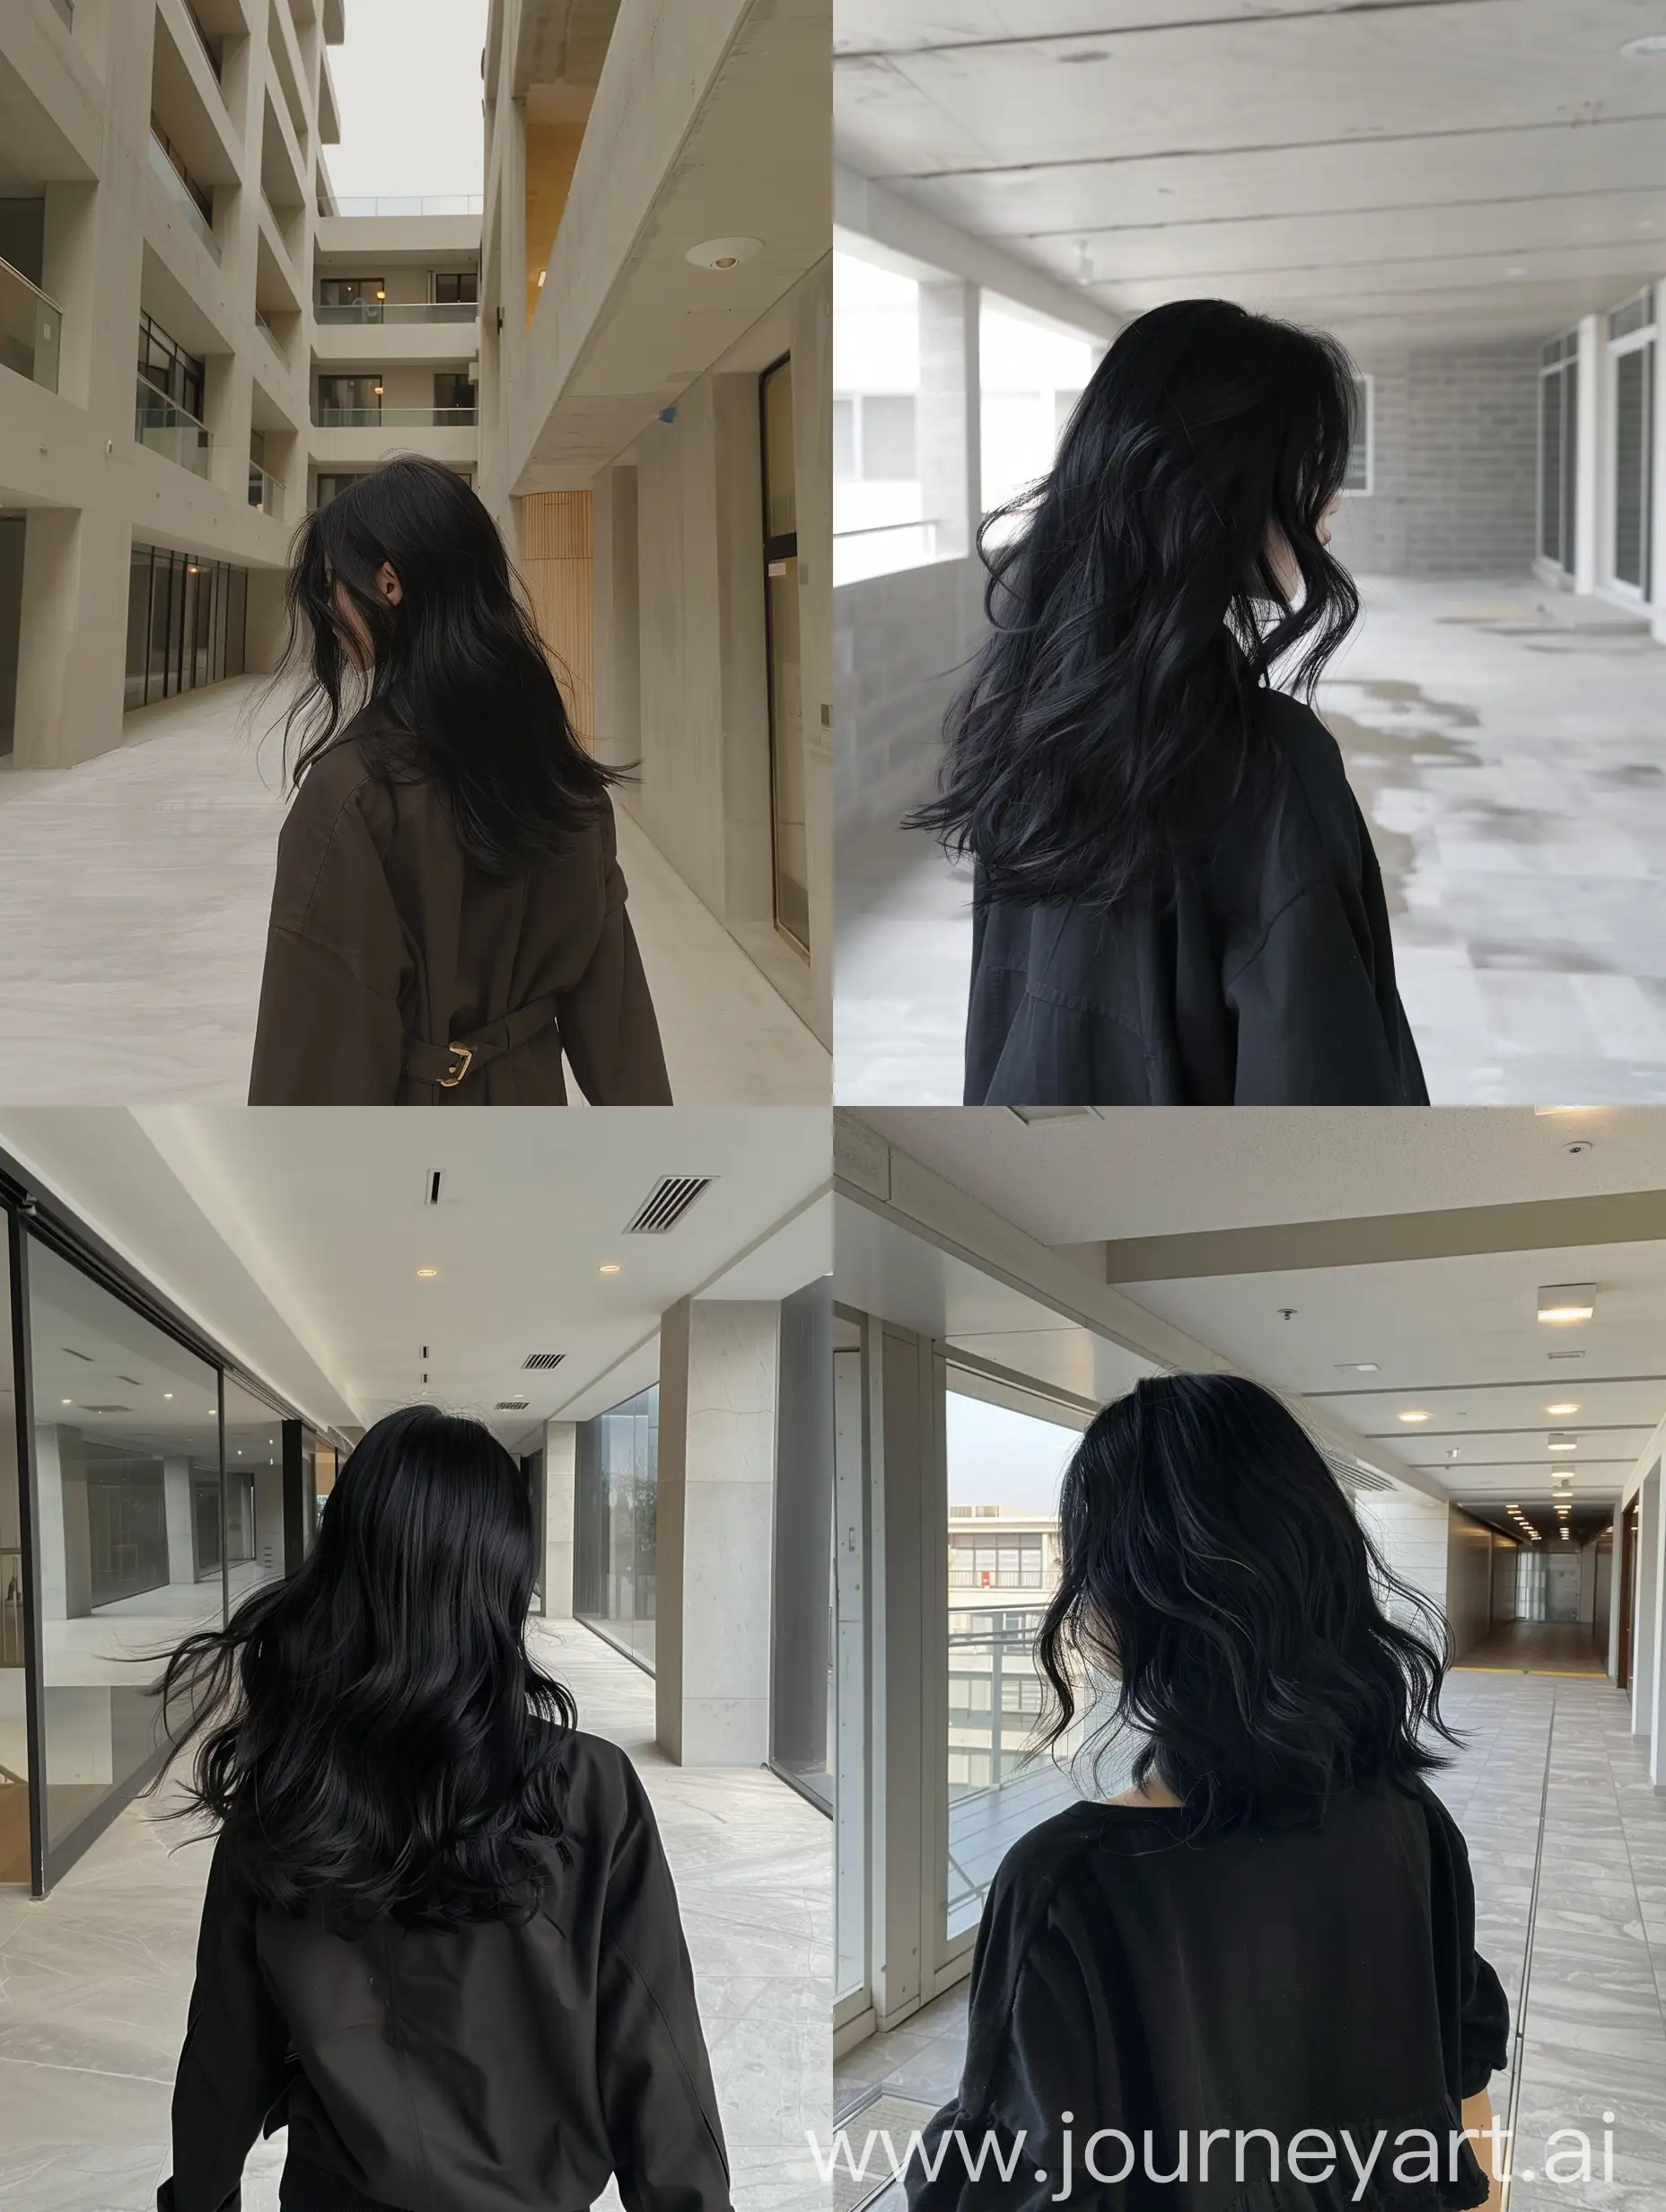 Modern-Apartment-Stroll-Jennie-of-Blackpink-Captures-an-Aesthetic-Selfie